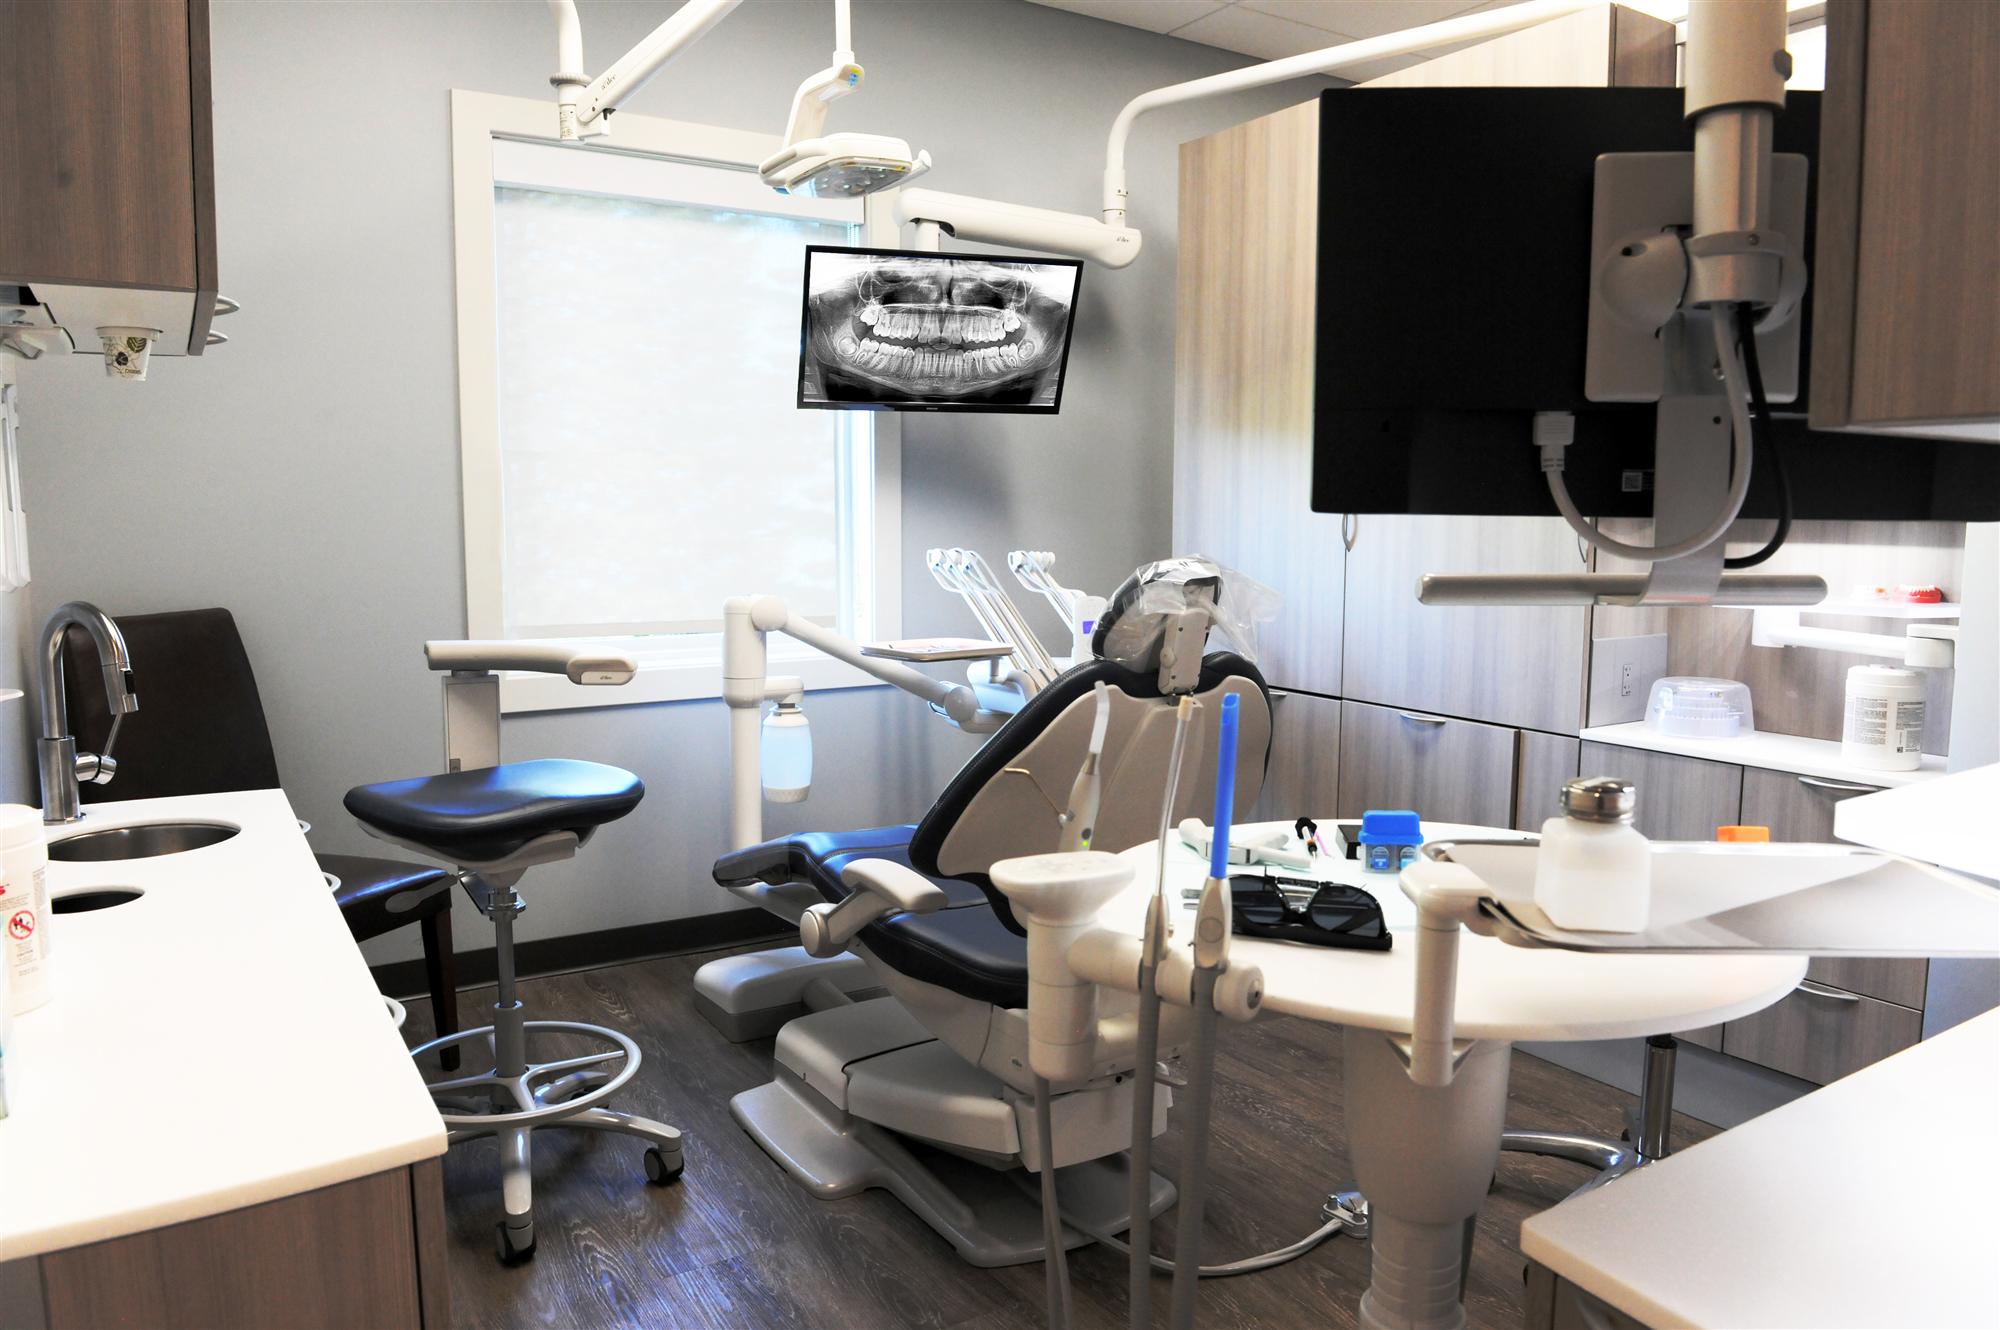 Tanty Family Dental Office Treatment Room